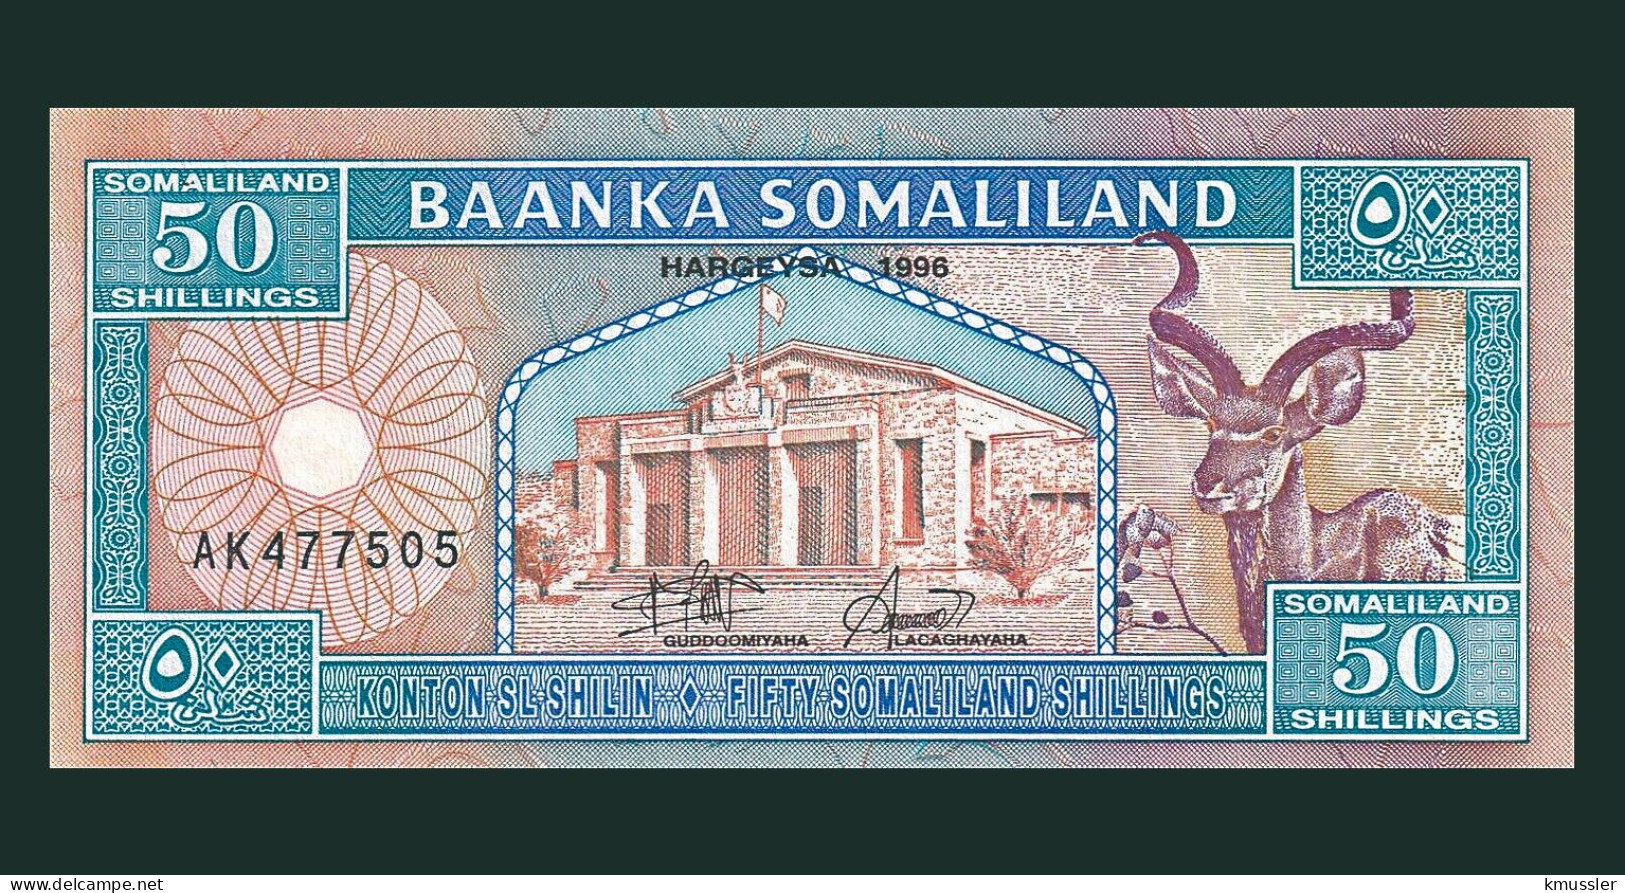 # # # Banknote Aus Somaliland 50 Shillings 1996 (P-7) UNC # # # - Somalie